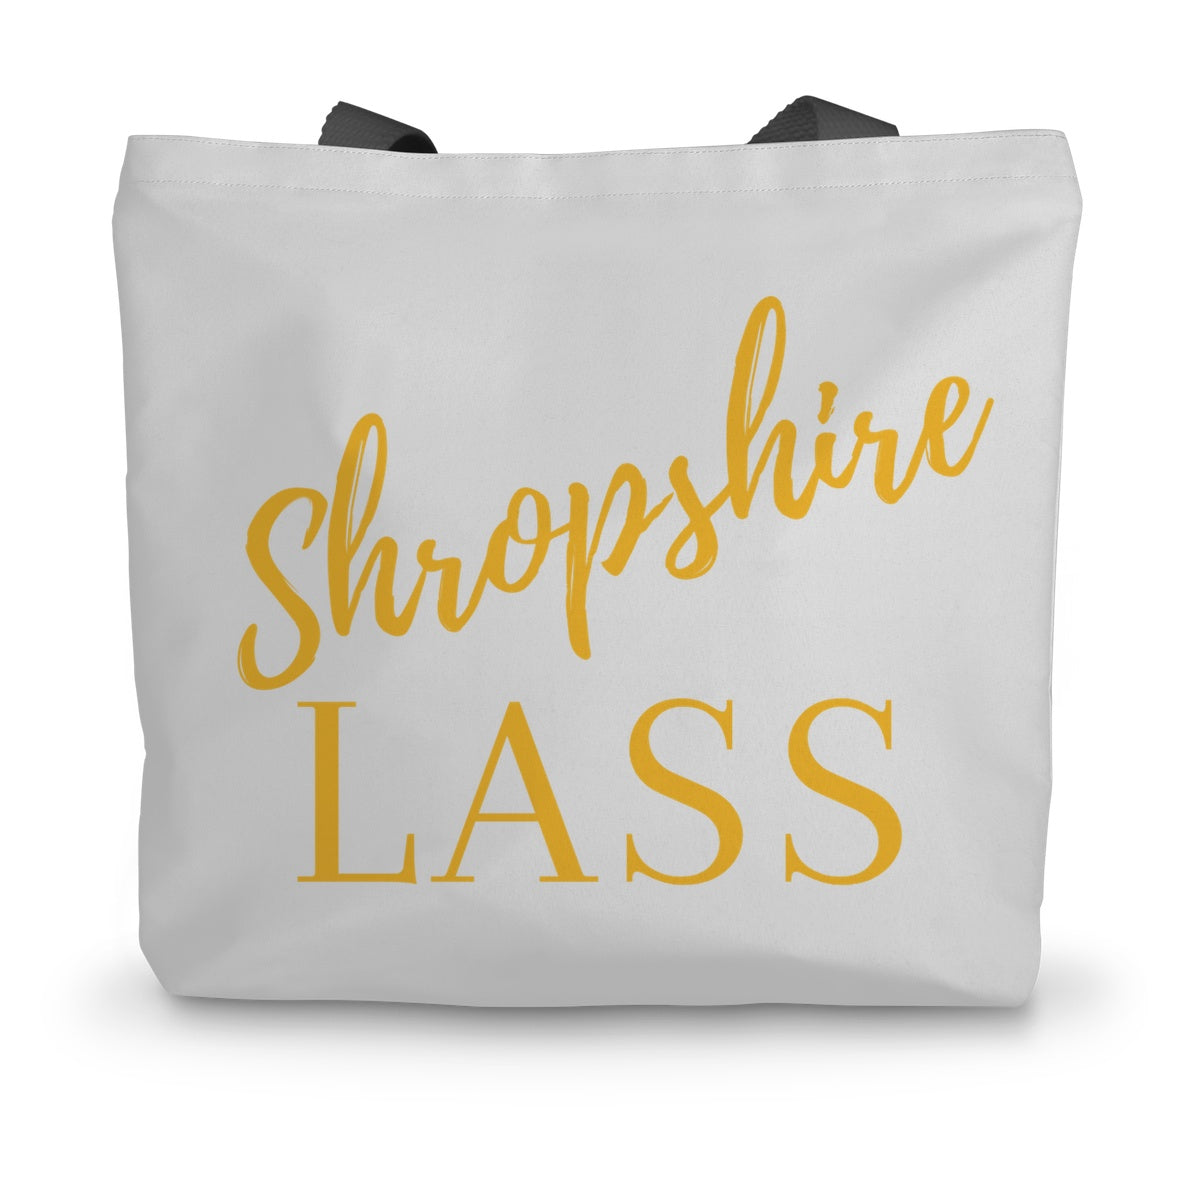 Shropshire Lass Canvas Tote Bag